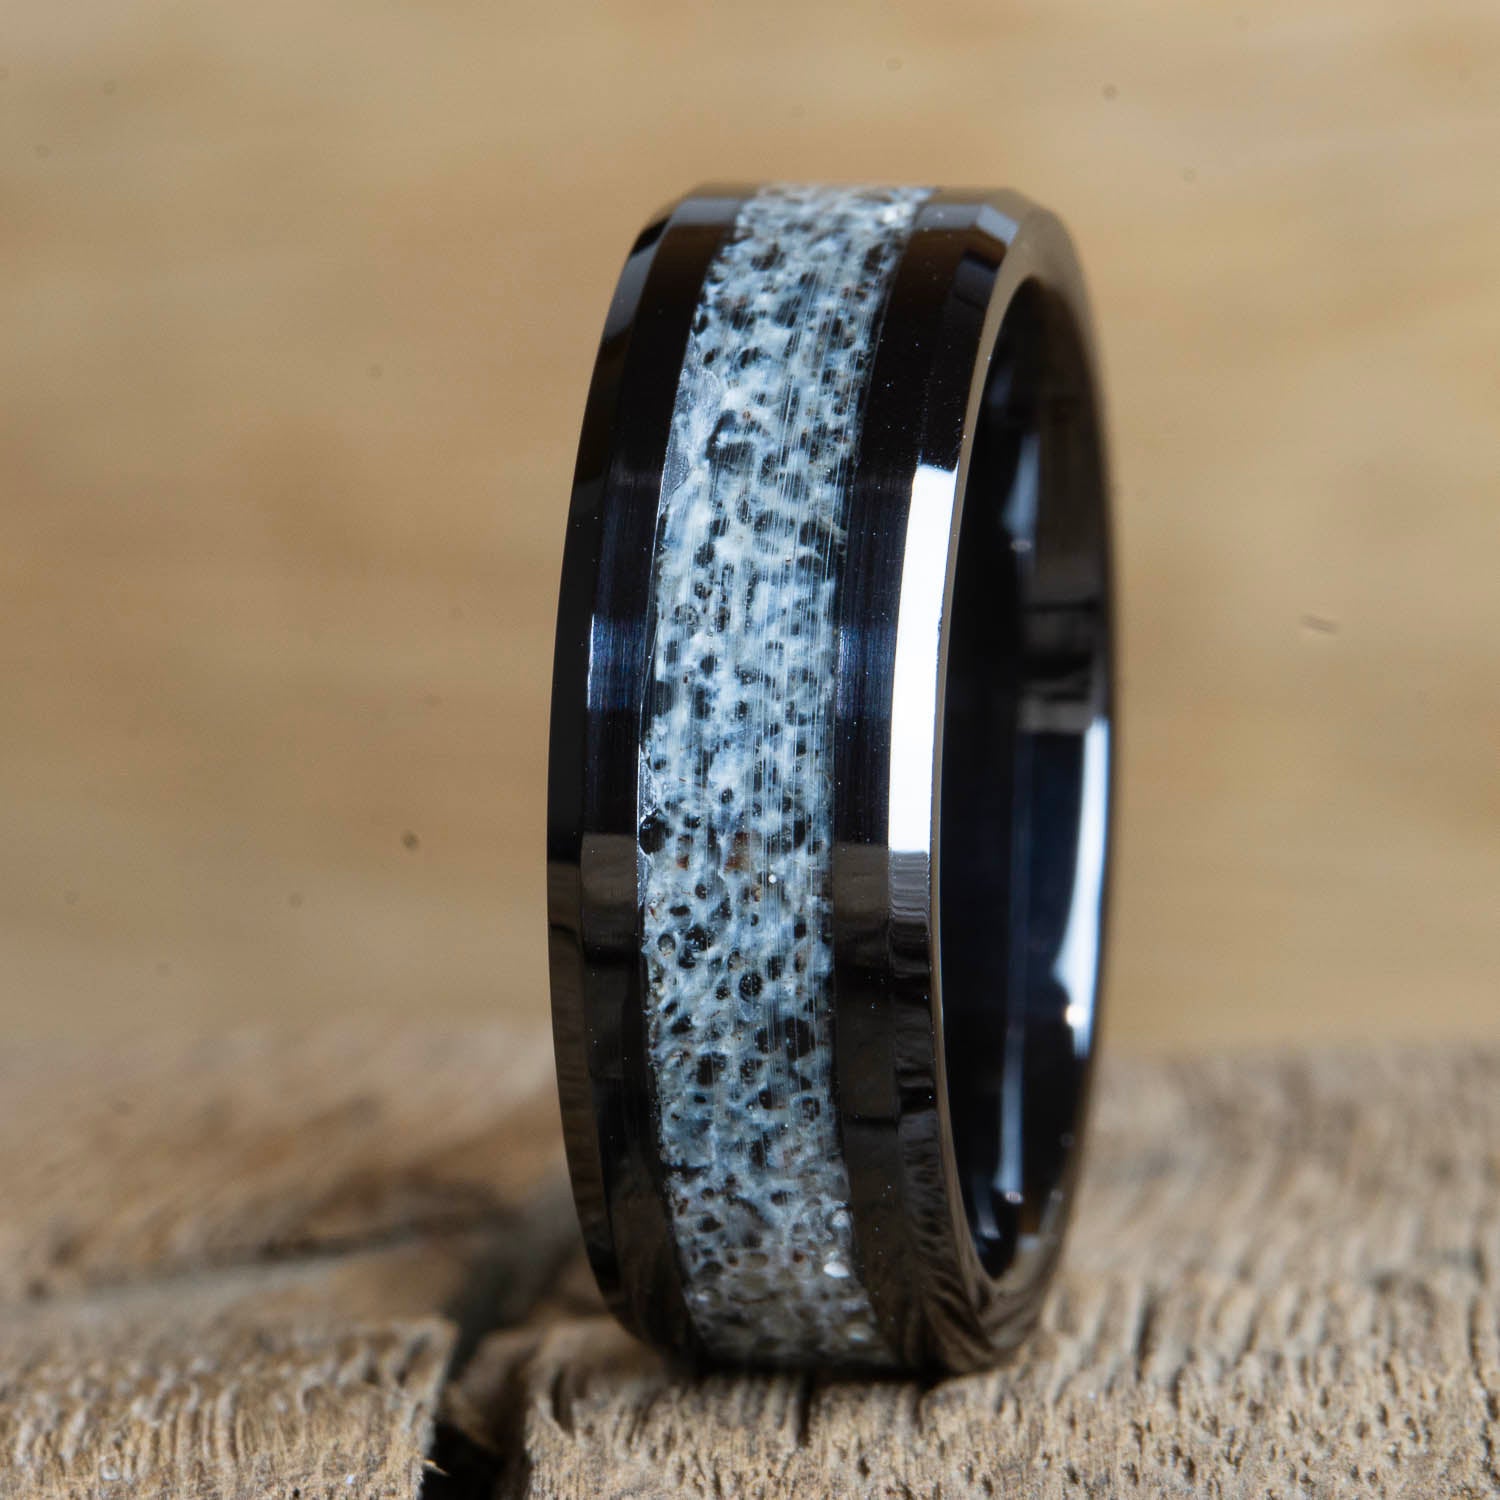 Beveled edge black ring with Antler